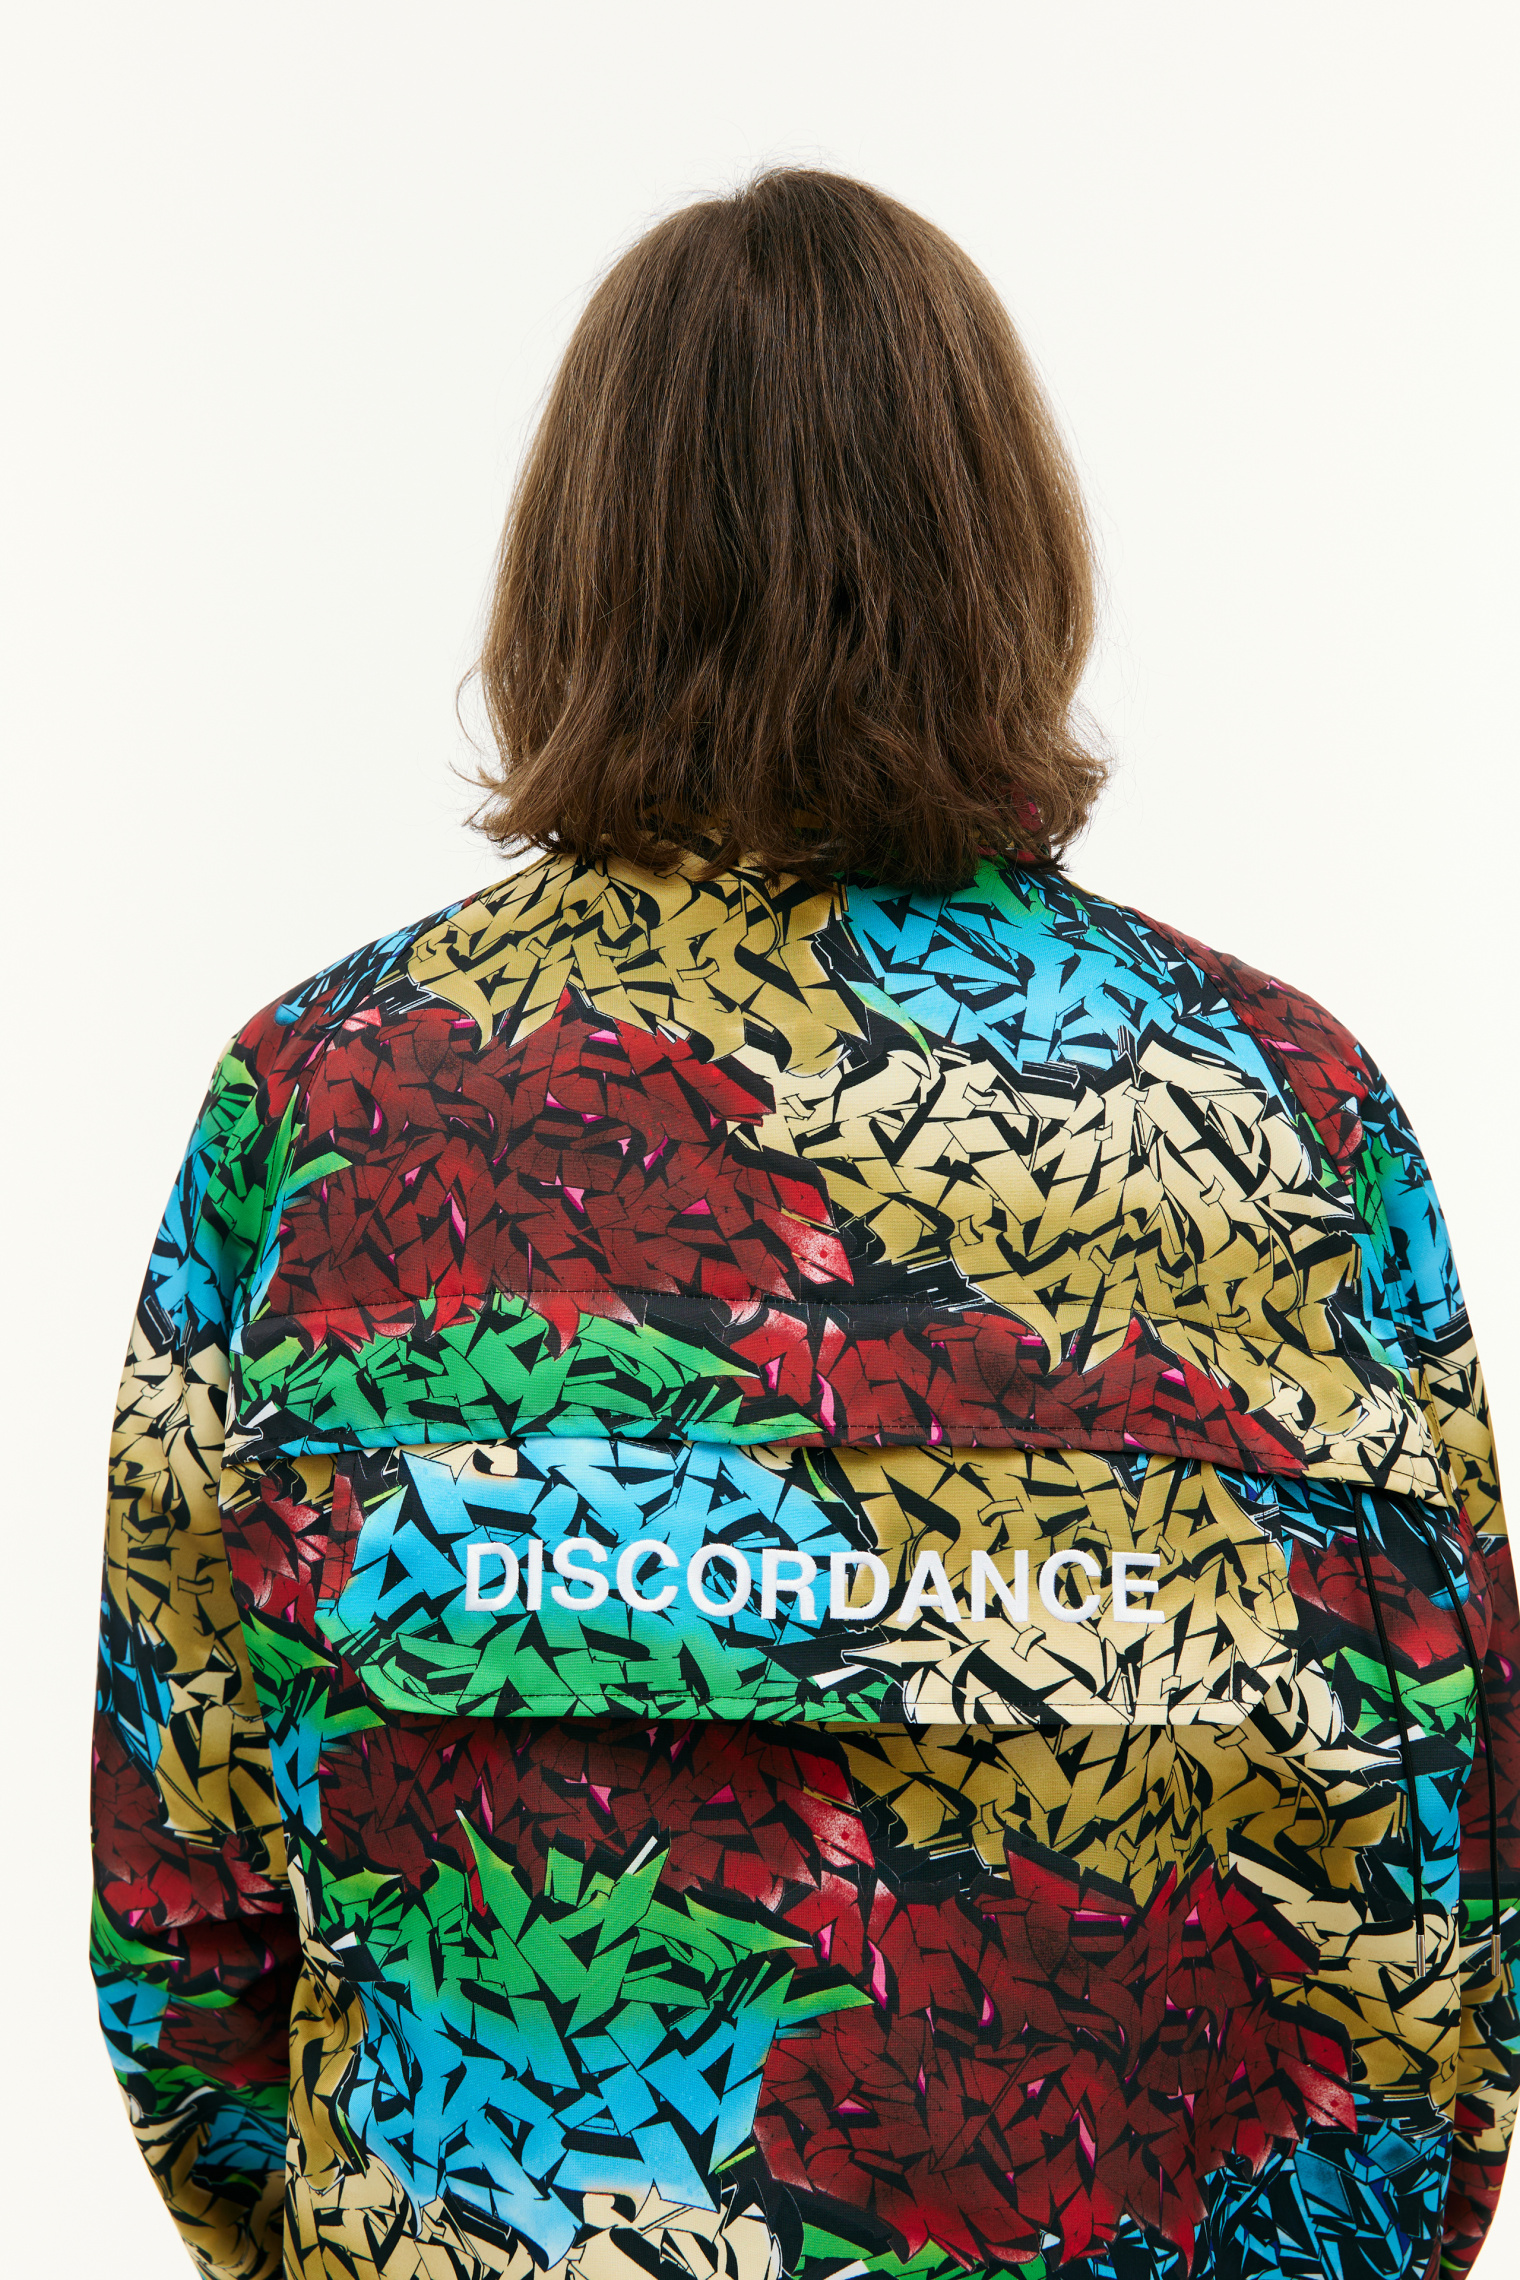 Children of the discordance Jacket with graffiti print